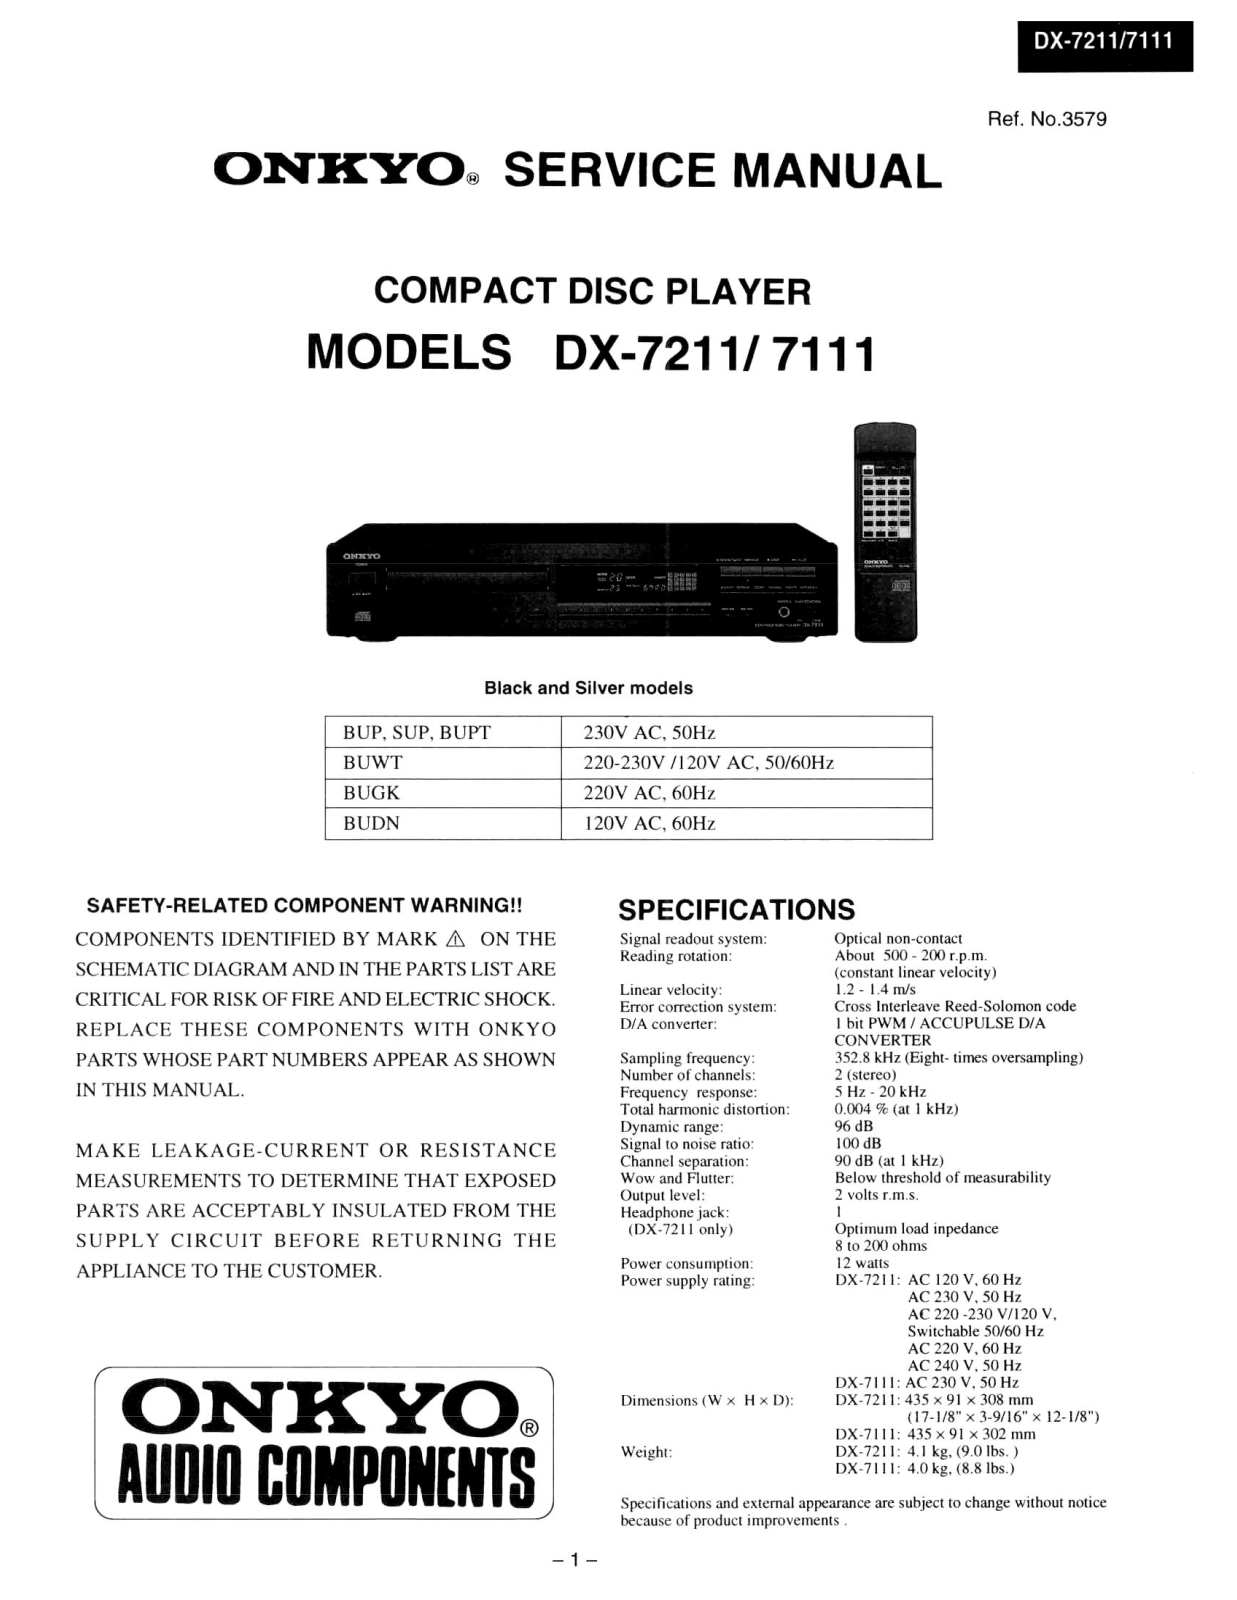 Onkyo DX-7211 Service Manual